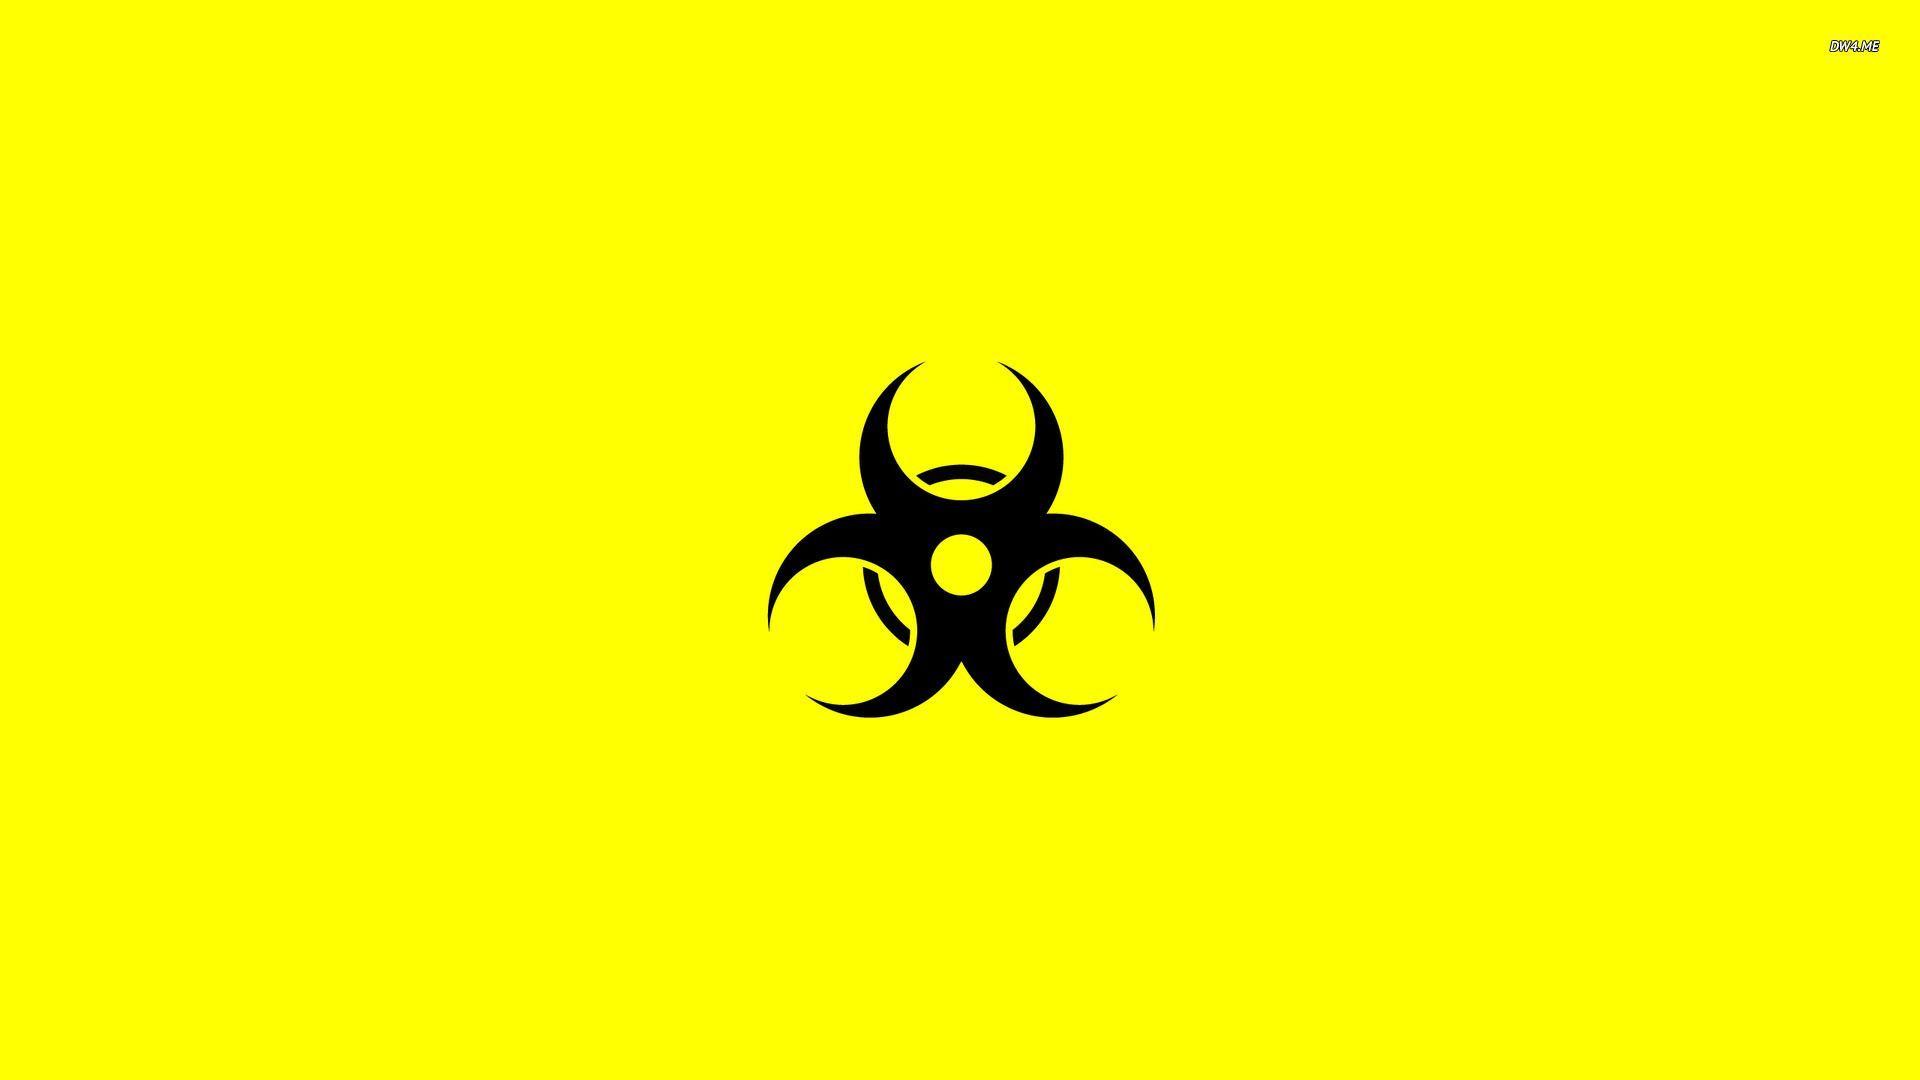 Wallpaper For > Biohazard Symbol Wallpaper